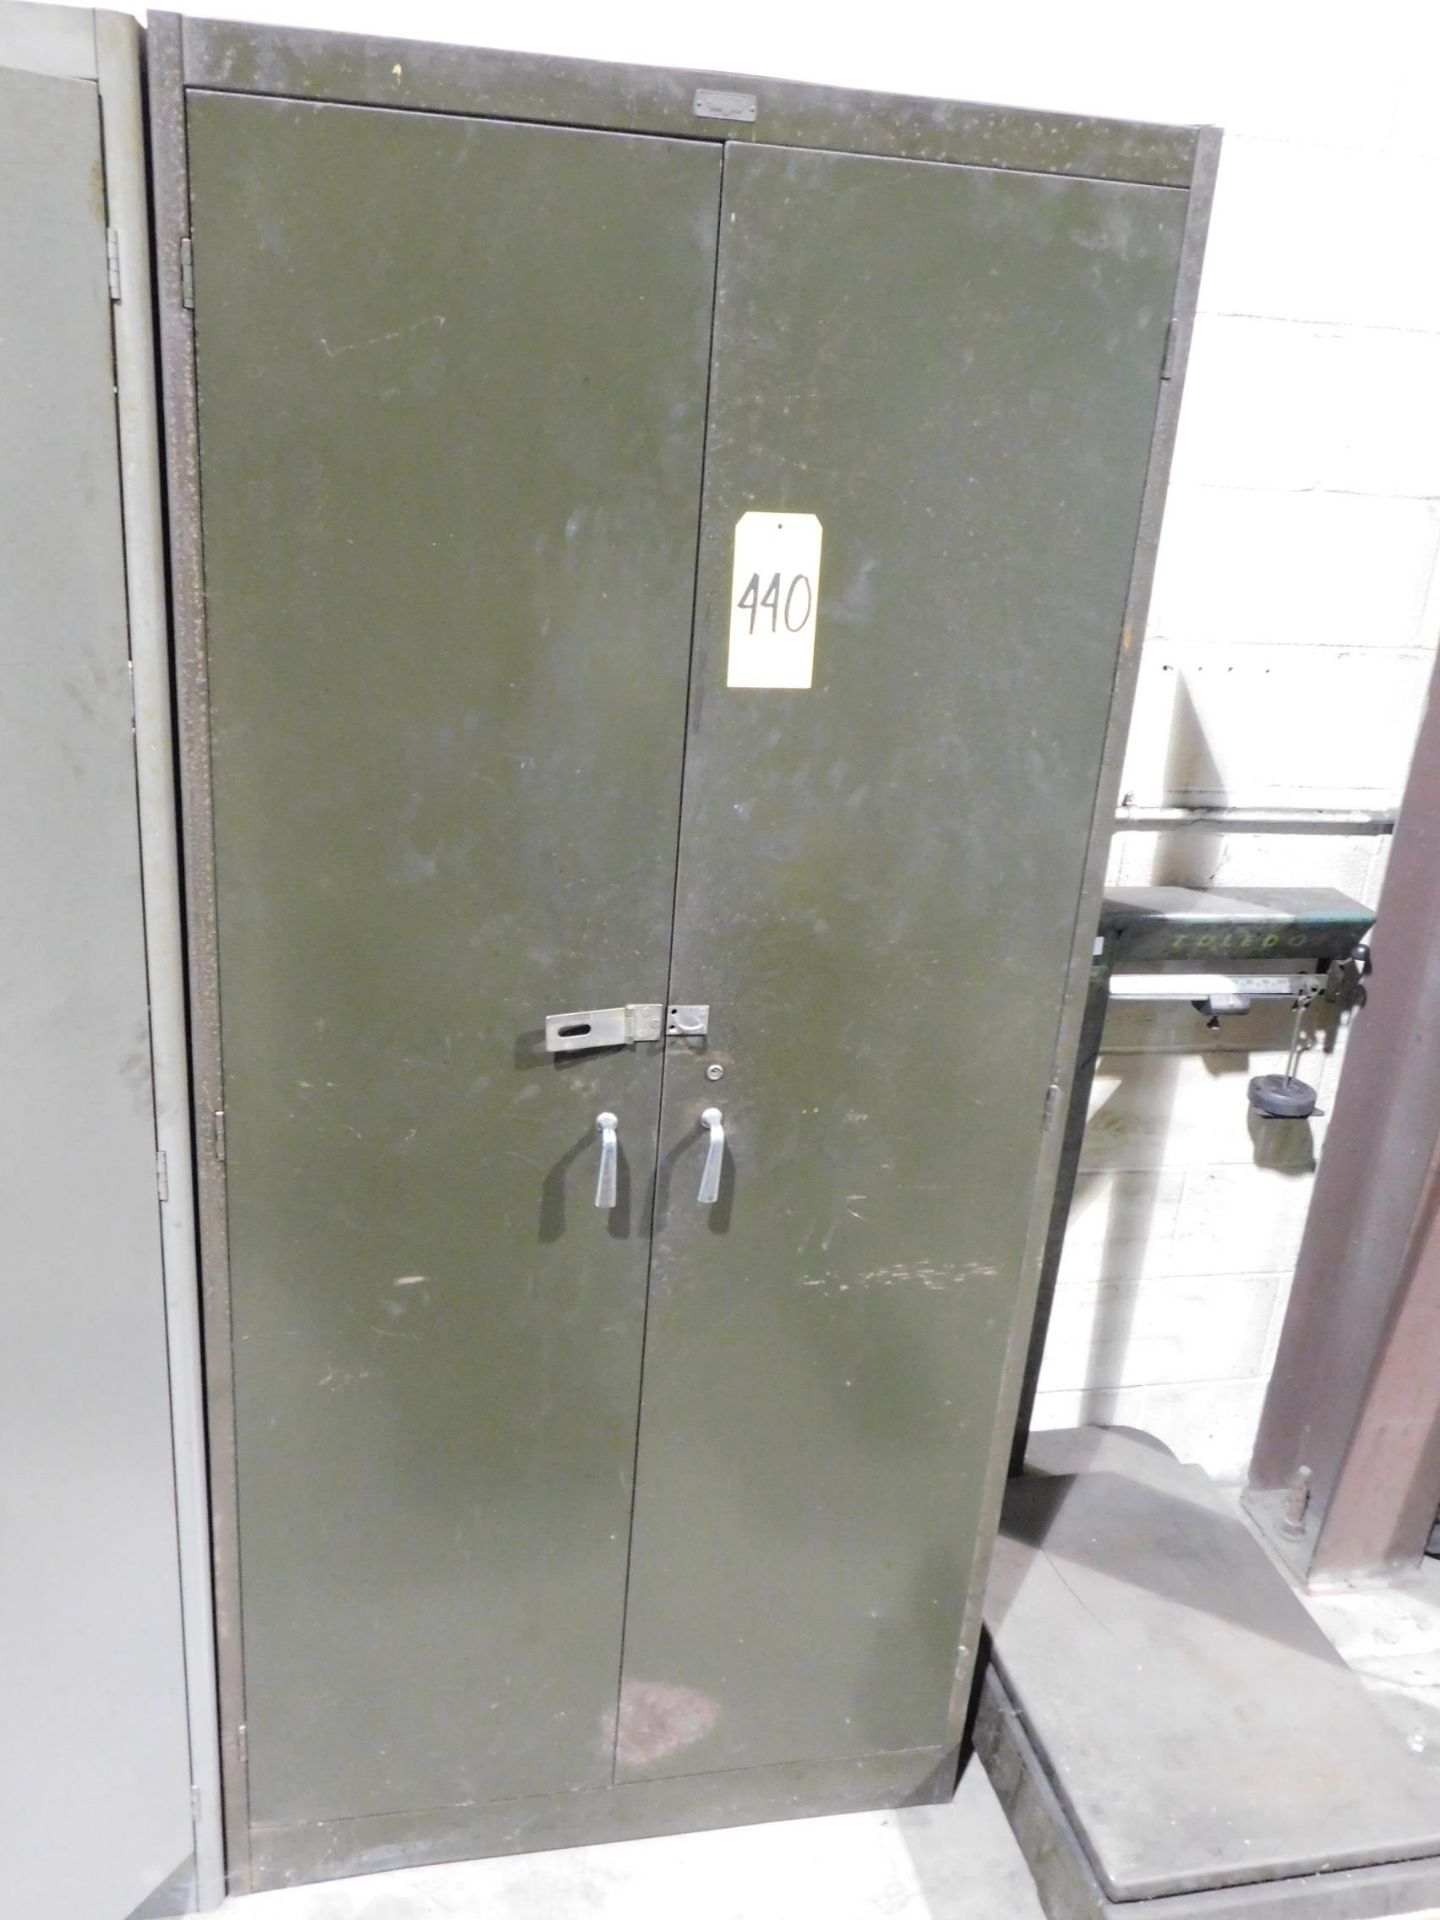 2-Door Upright Storage Cabinet with Contents